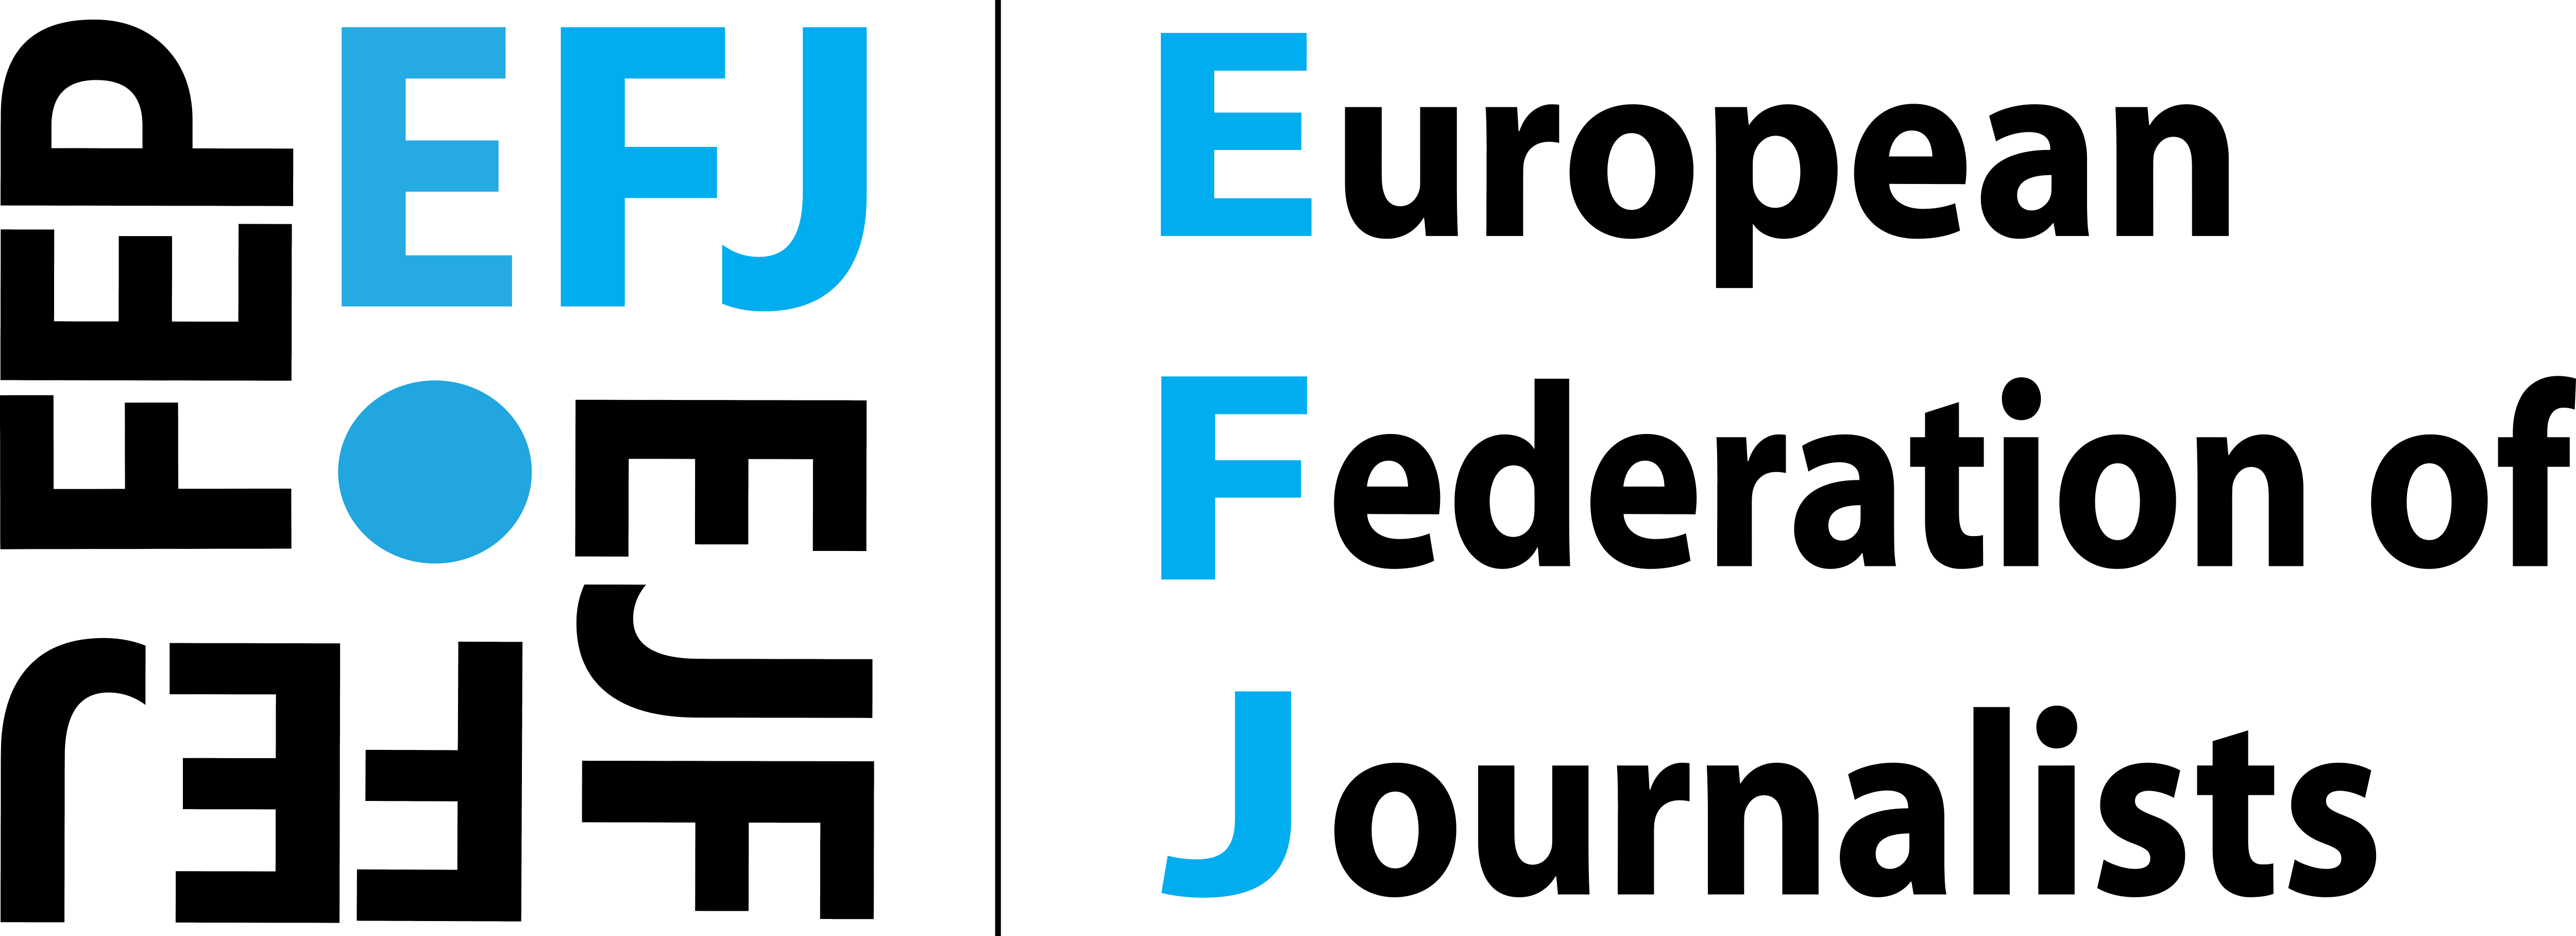 International Federation of Journalists  Logos  Download